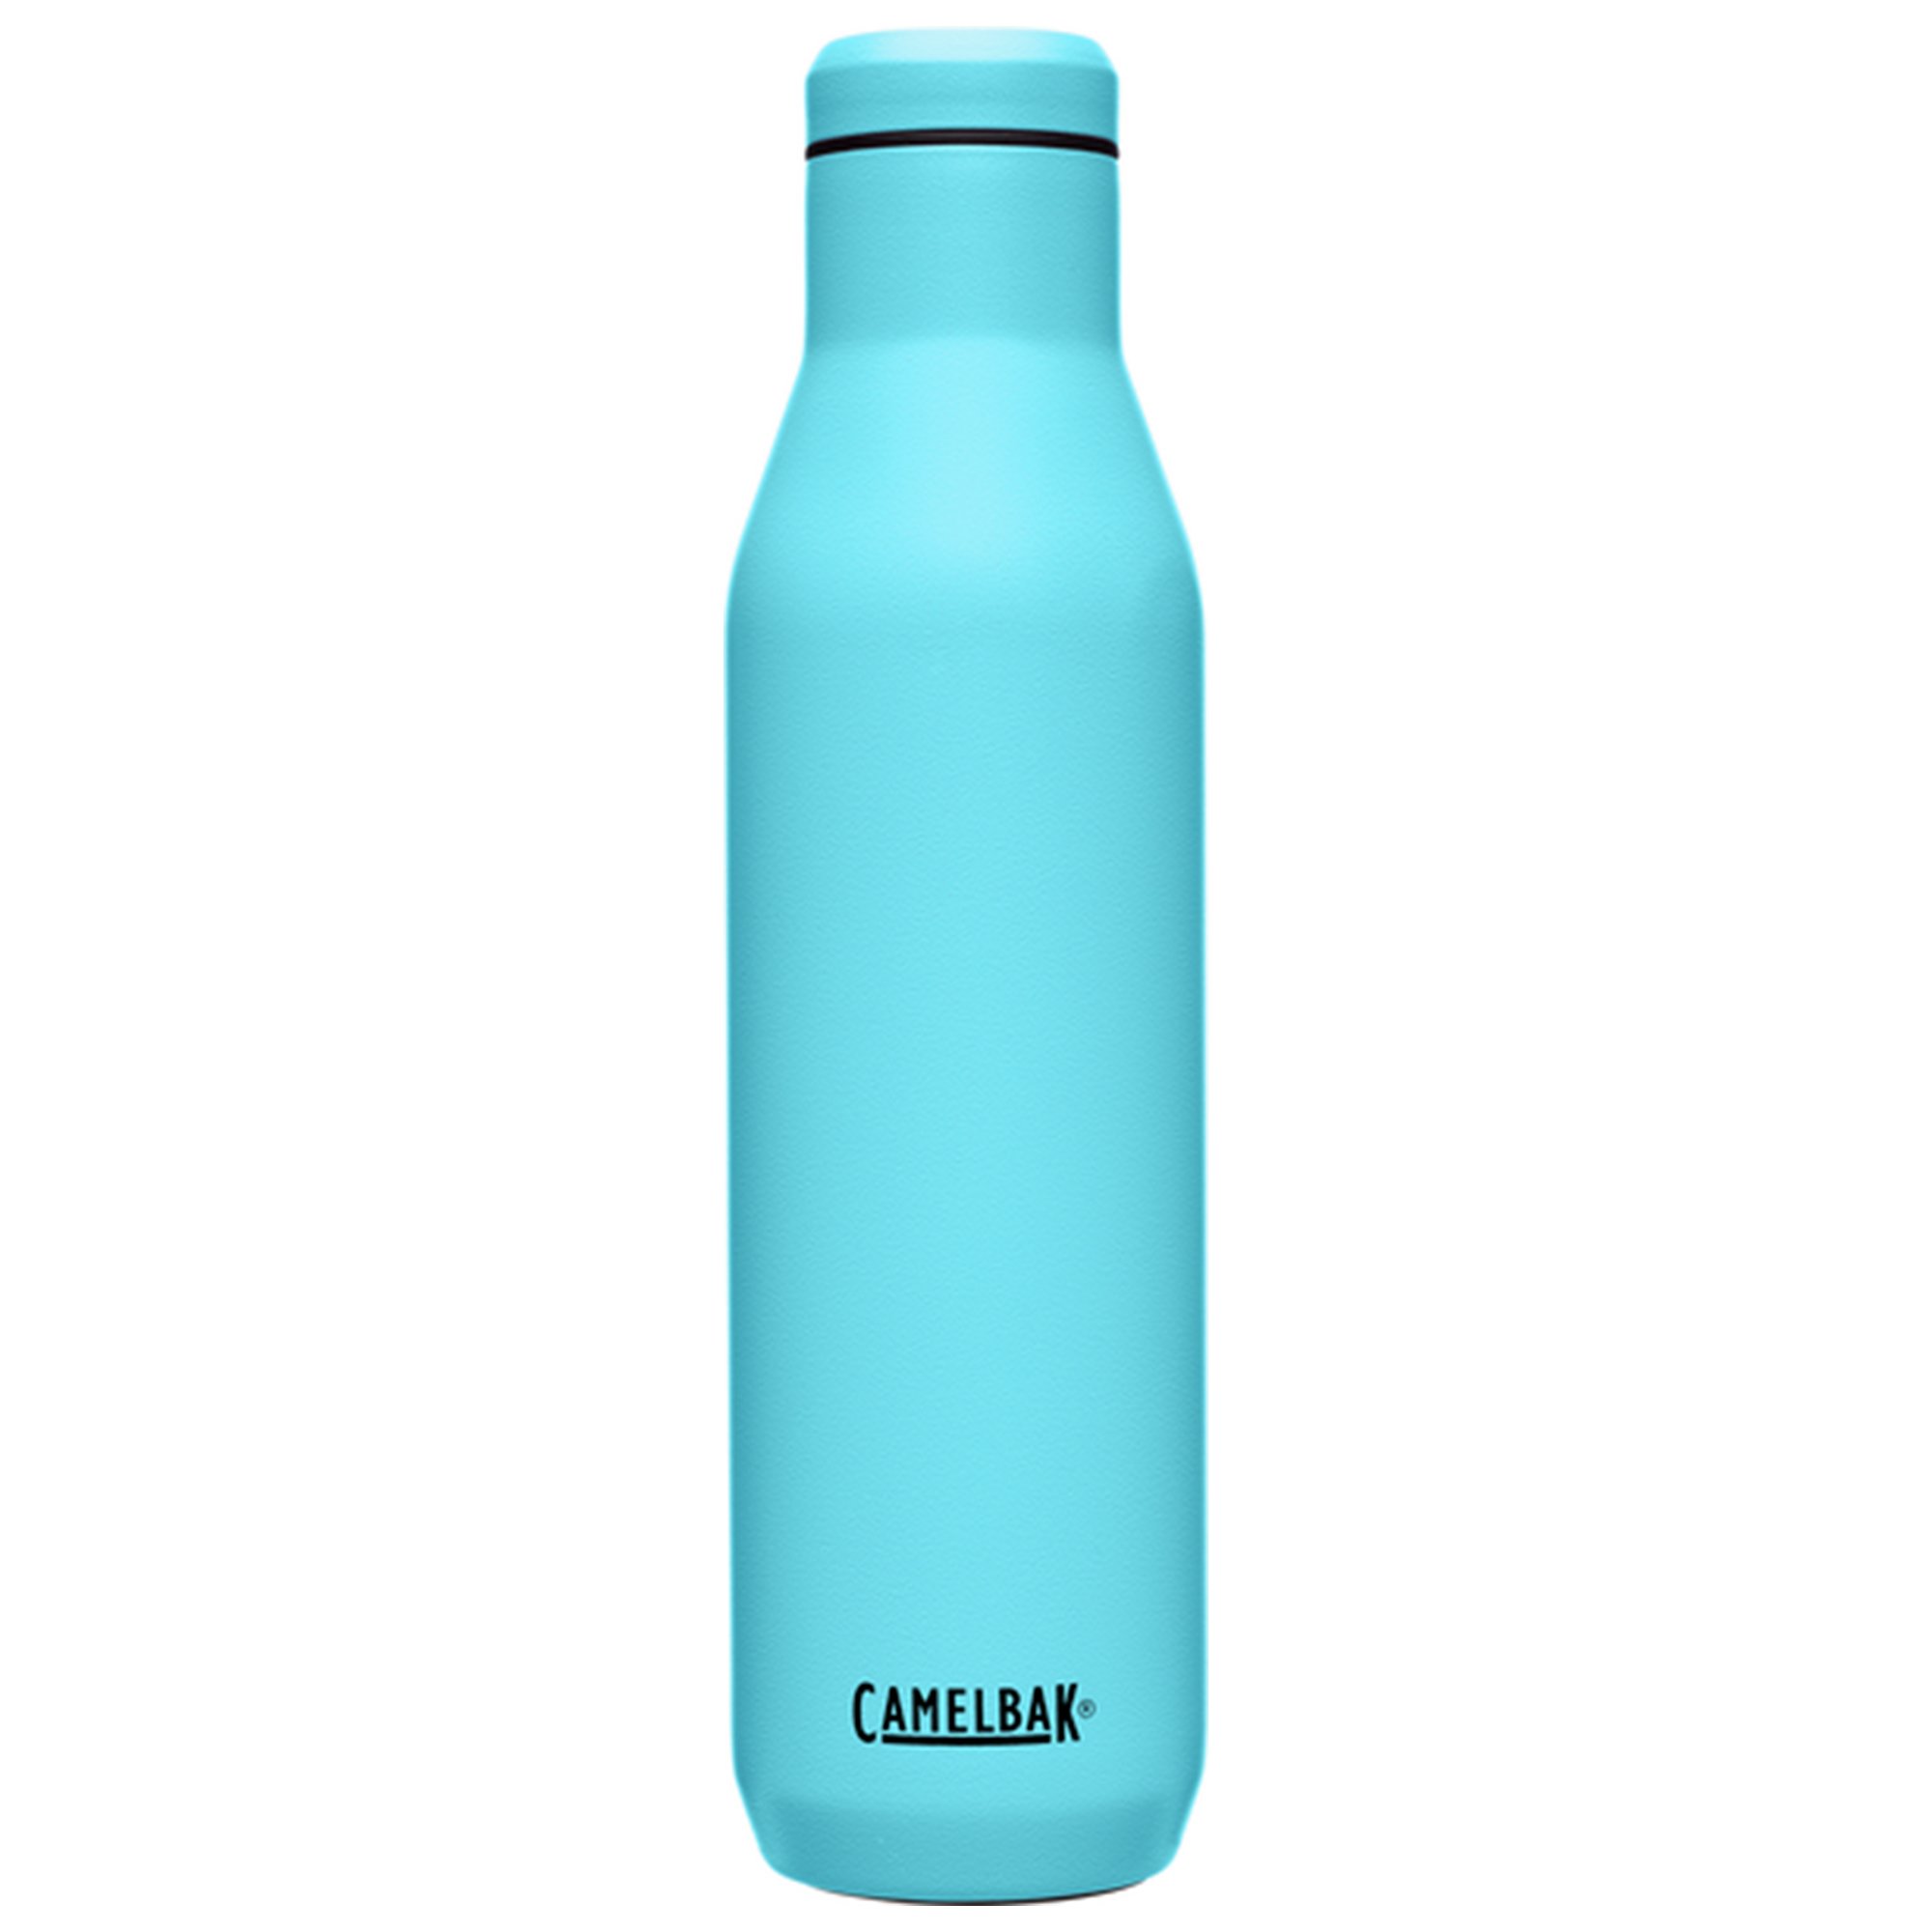 Camelbak Drikkeflaske 0,75 liter, nordic blue